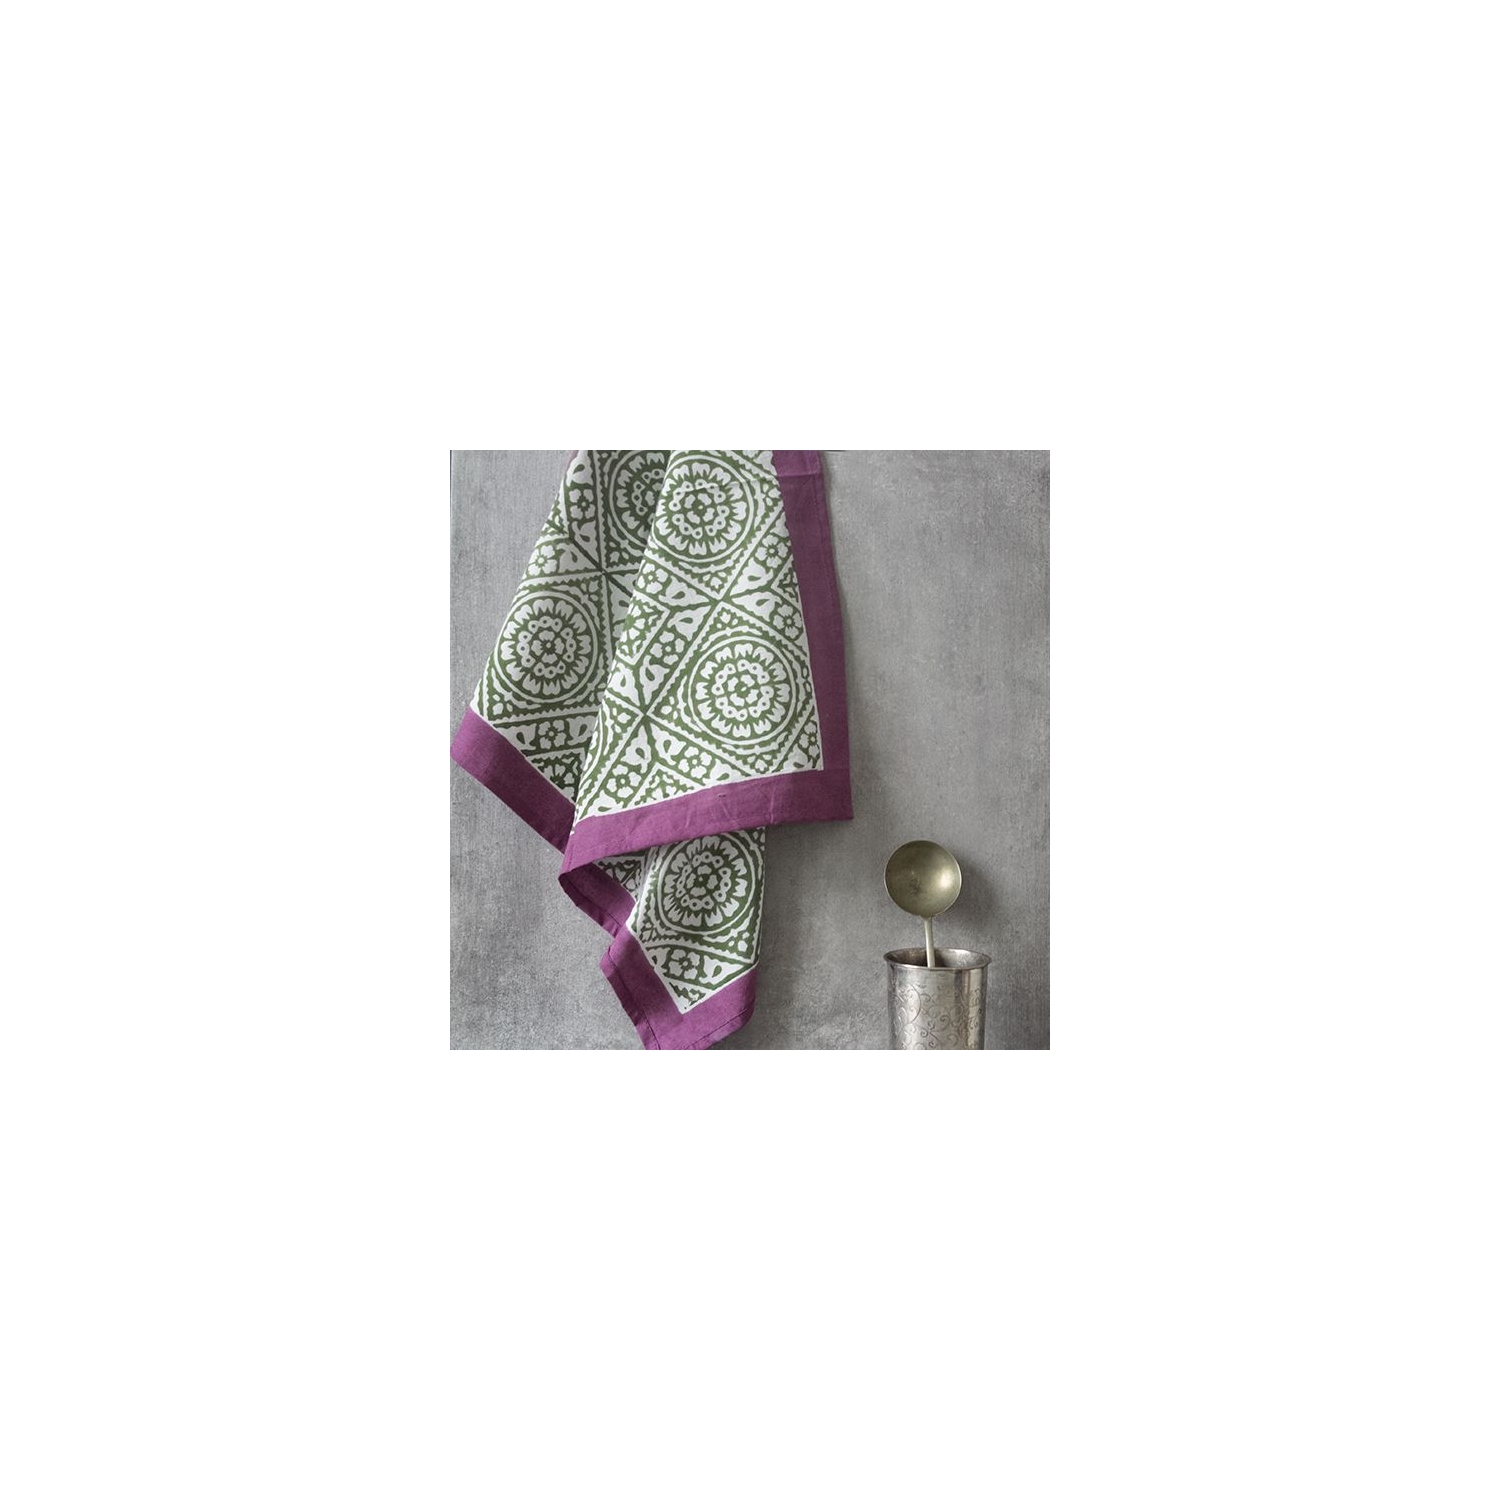 Indian handicraft kitchen towel or napkin purple and green